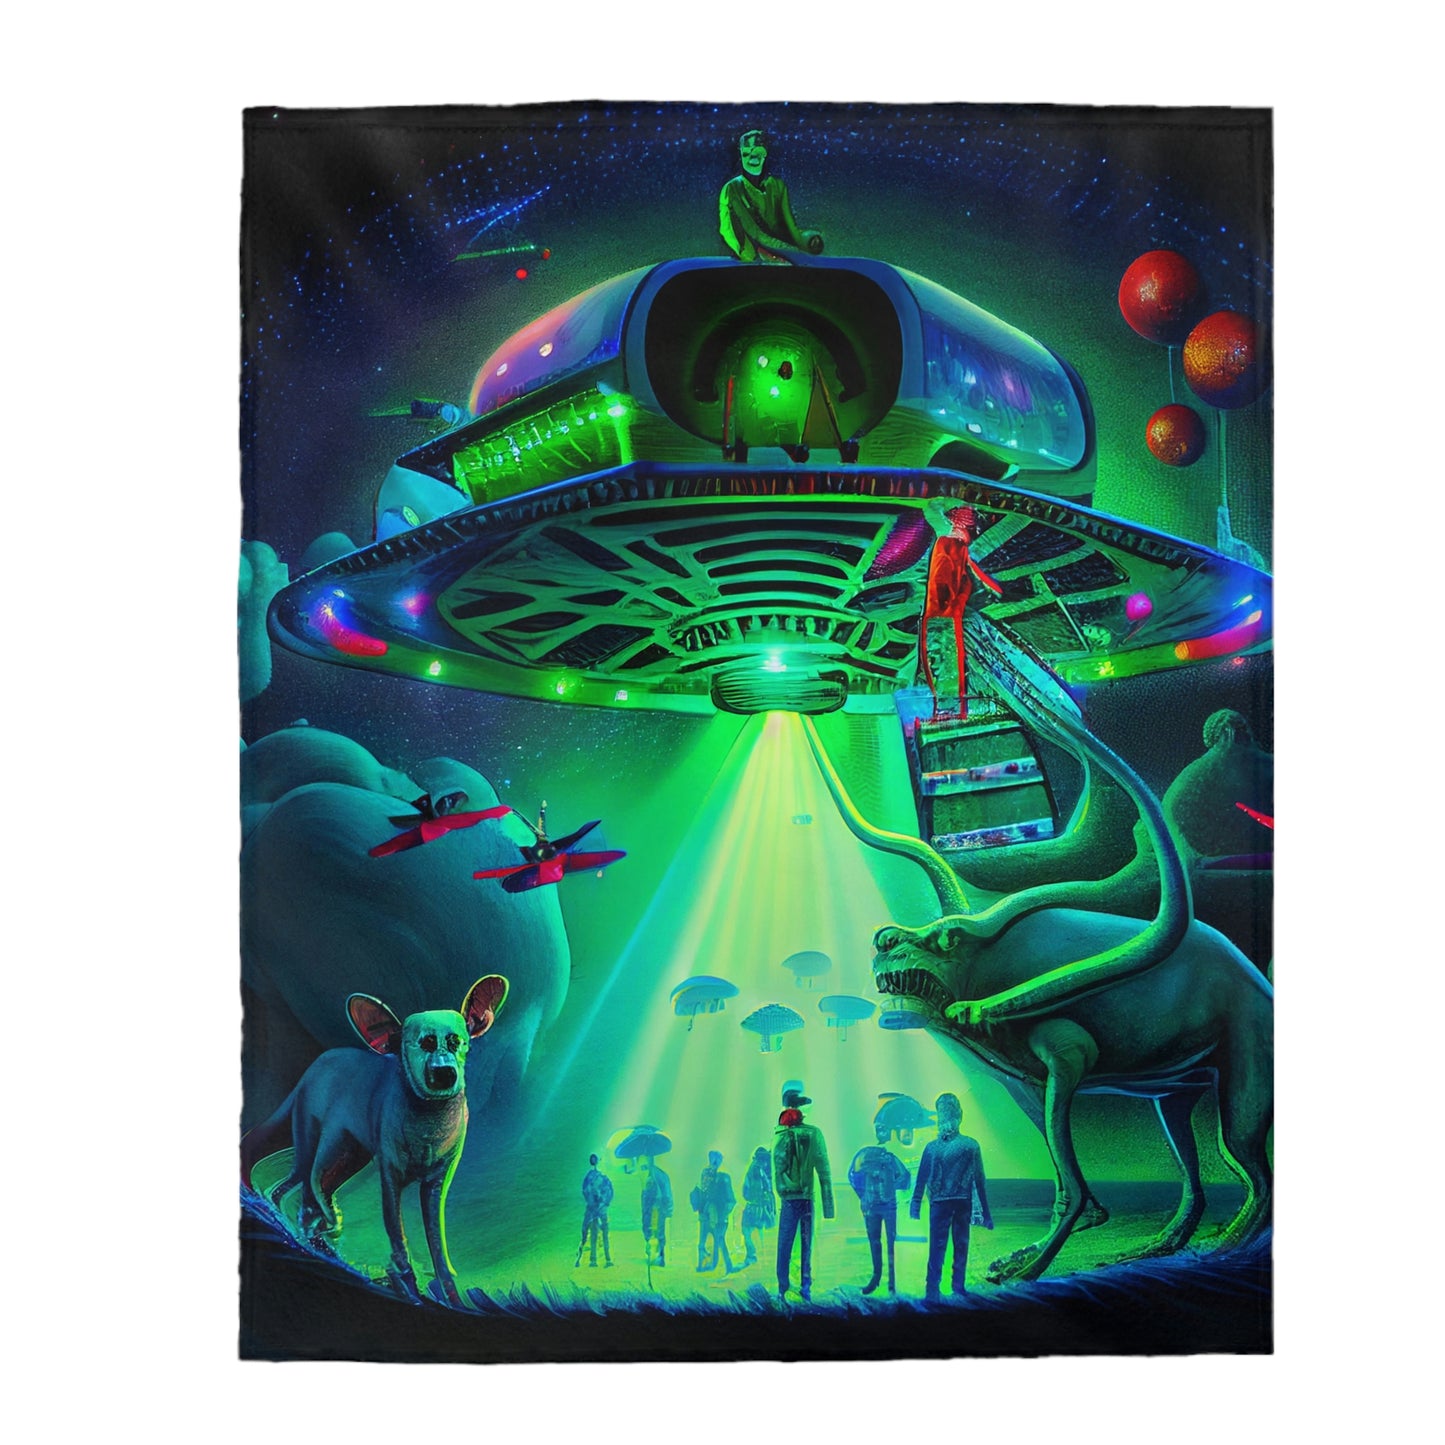 AUP (UFO ) Abduction Plush Blanket